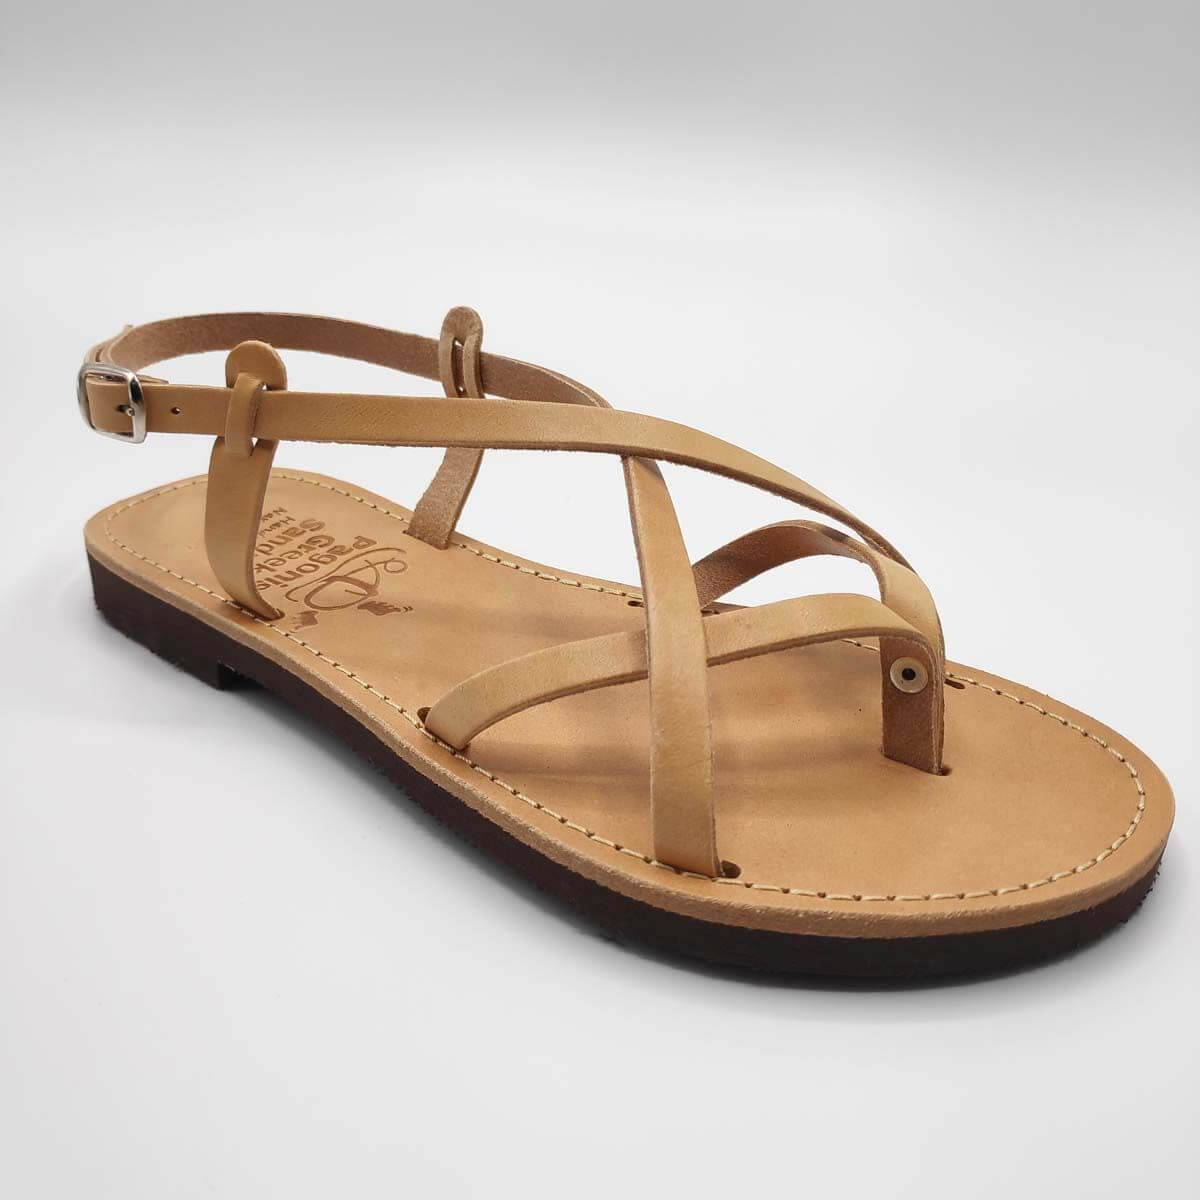 Women's Adventure Sandals with Back Strap – J-Slips Hawaiian Sandals